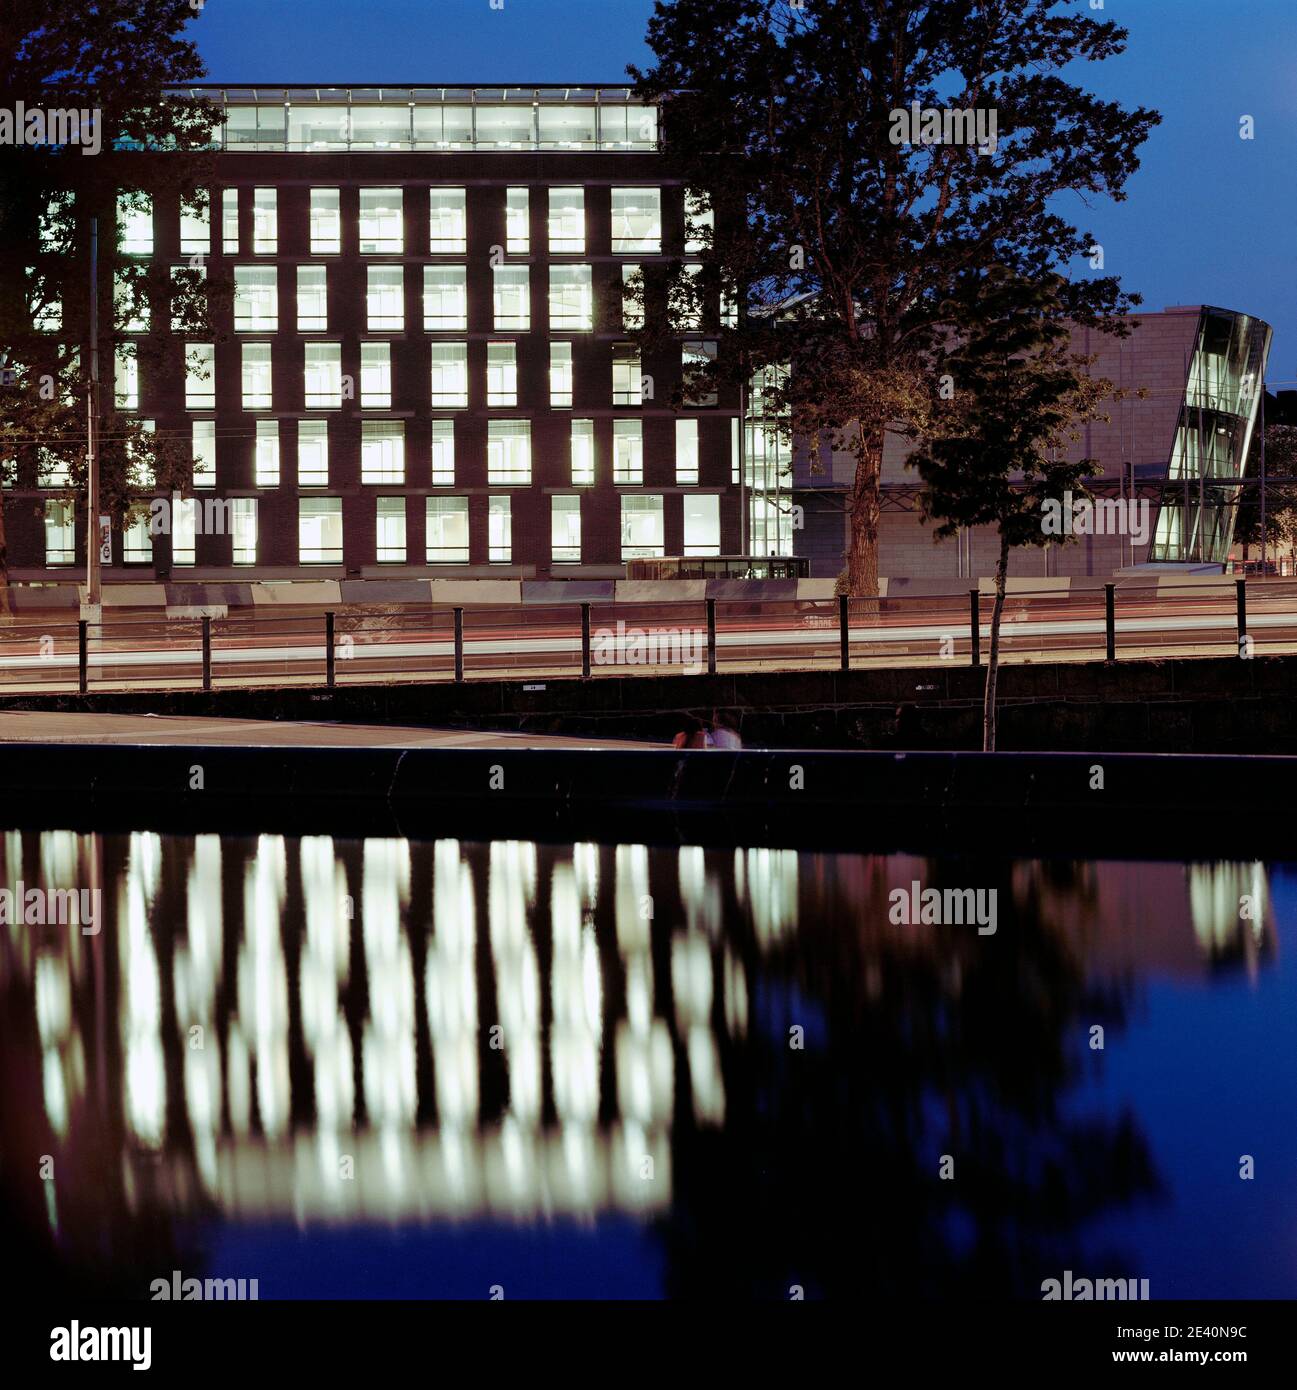 Parlement européen, Helsinki, Finlande Banque D'Images